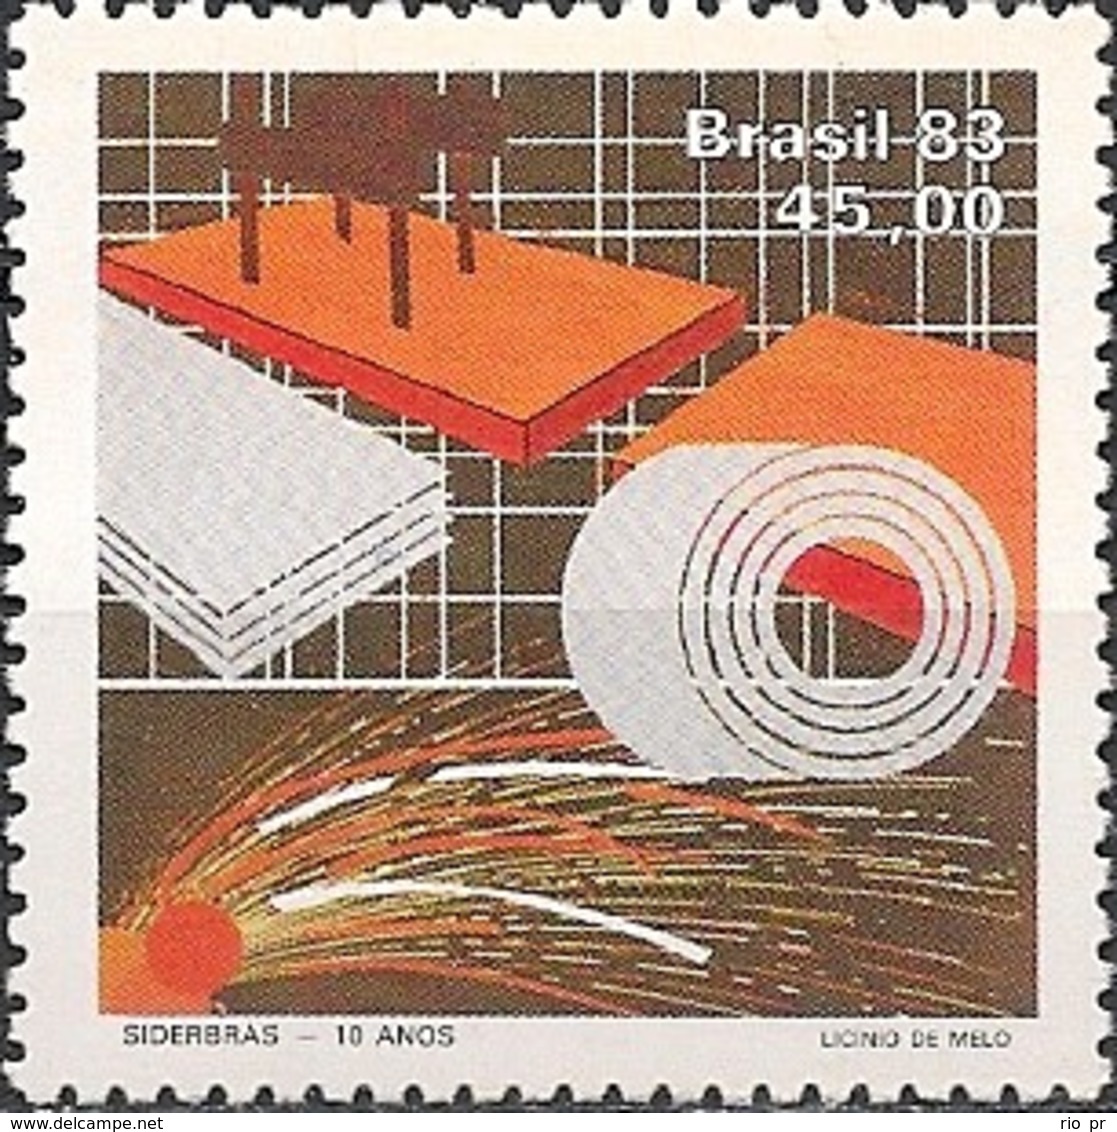 BRAZIL - NATIONAL STEEL CORPORATION (SIDERBRÁS), 10th ANNIVERSARY 1983 - MNH - Ongebruikt